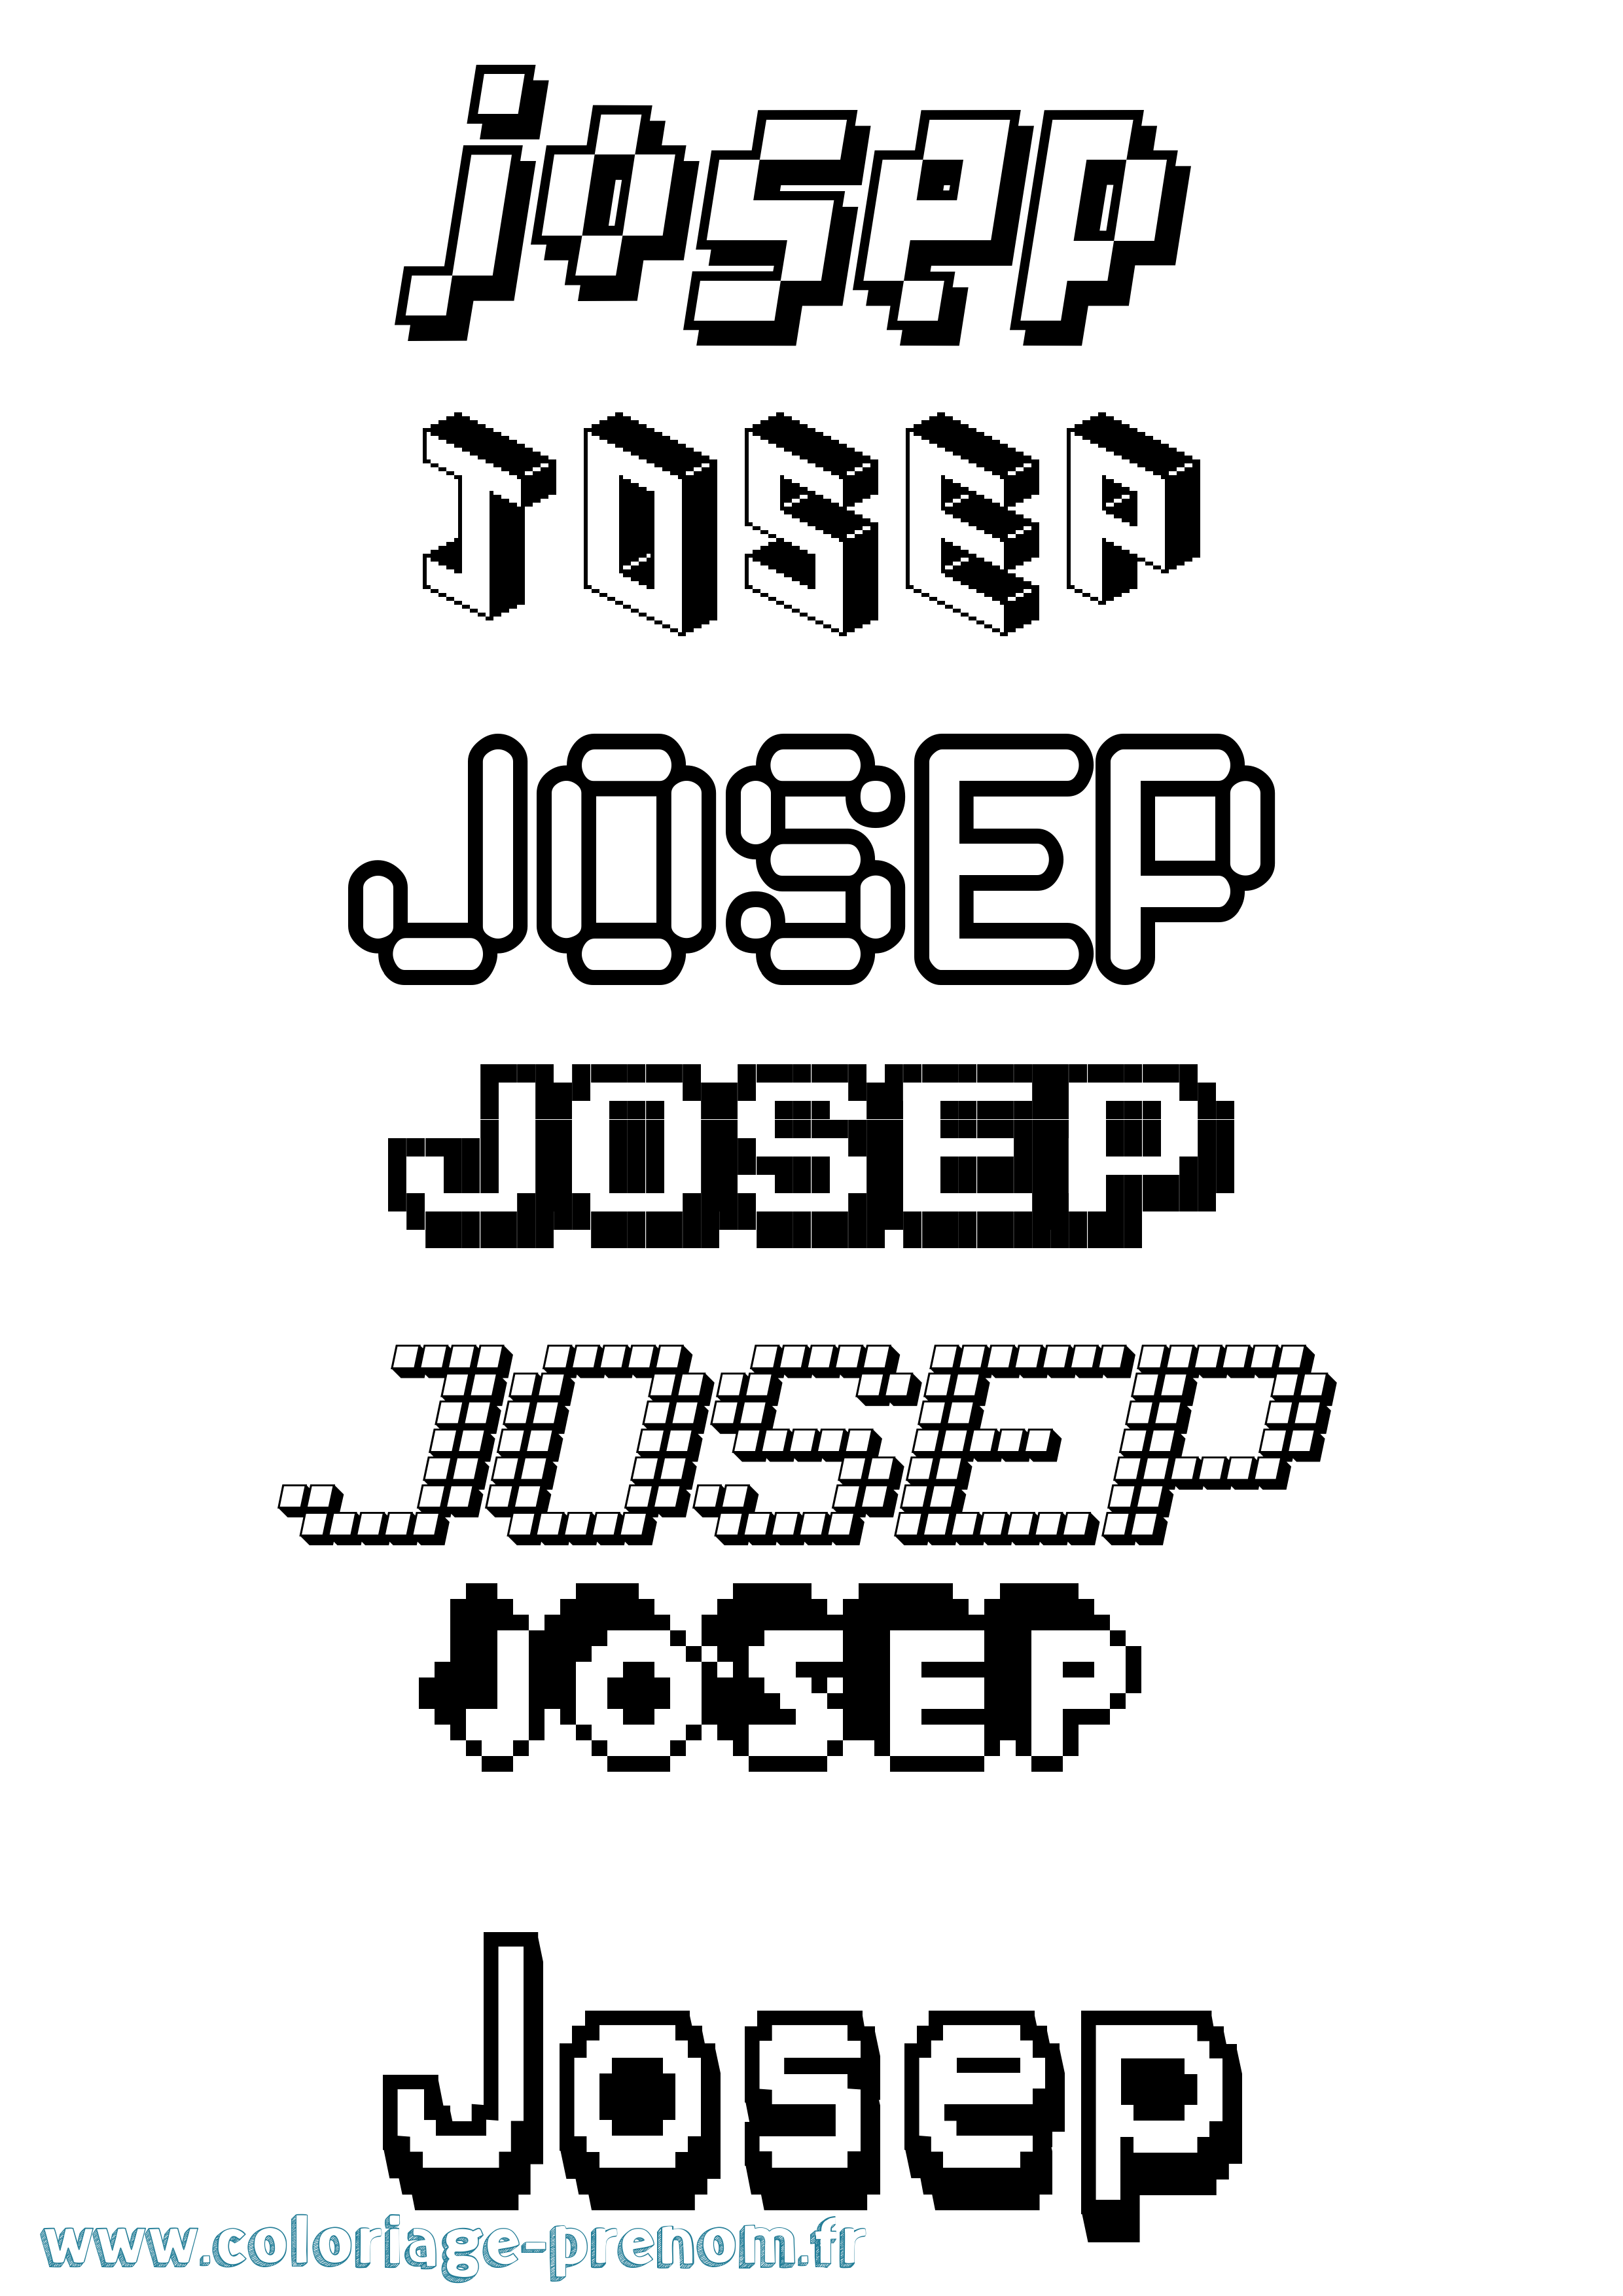 Coloriage prénom Josep Pixel